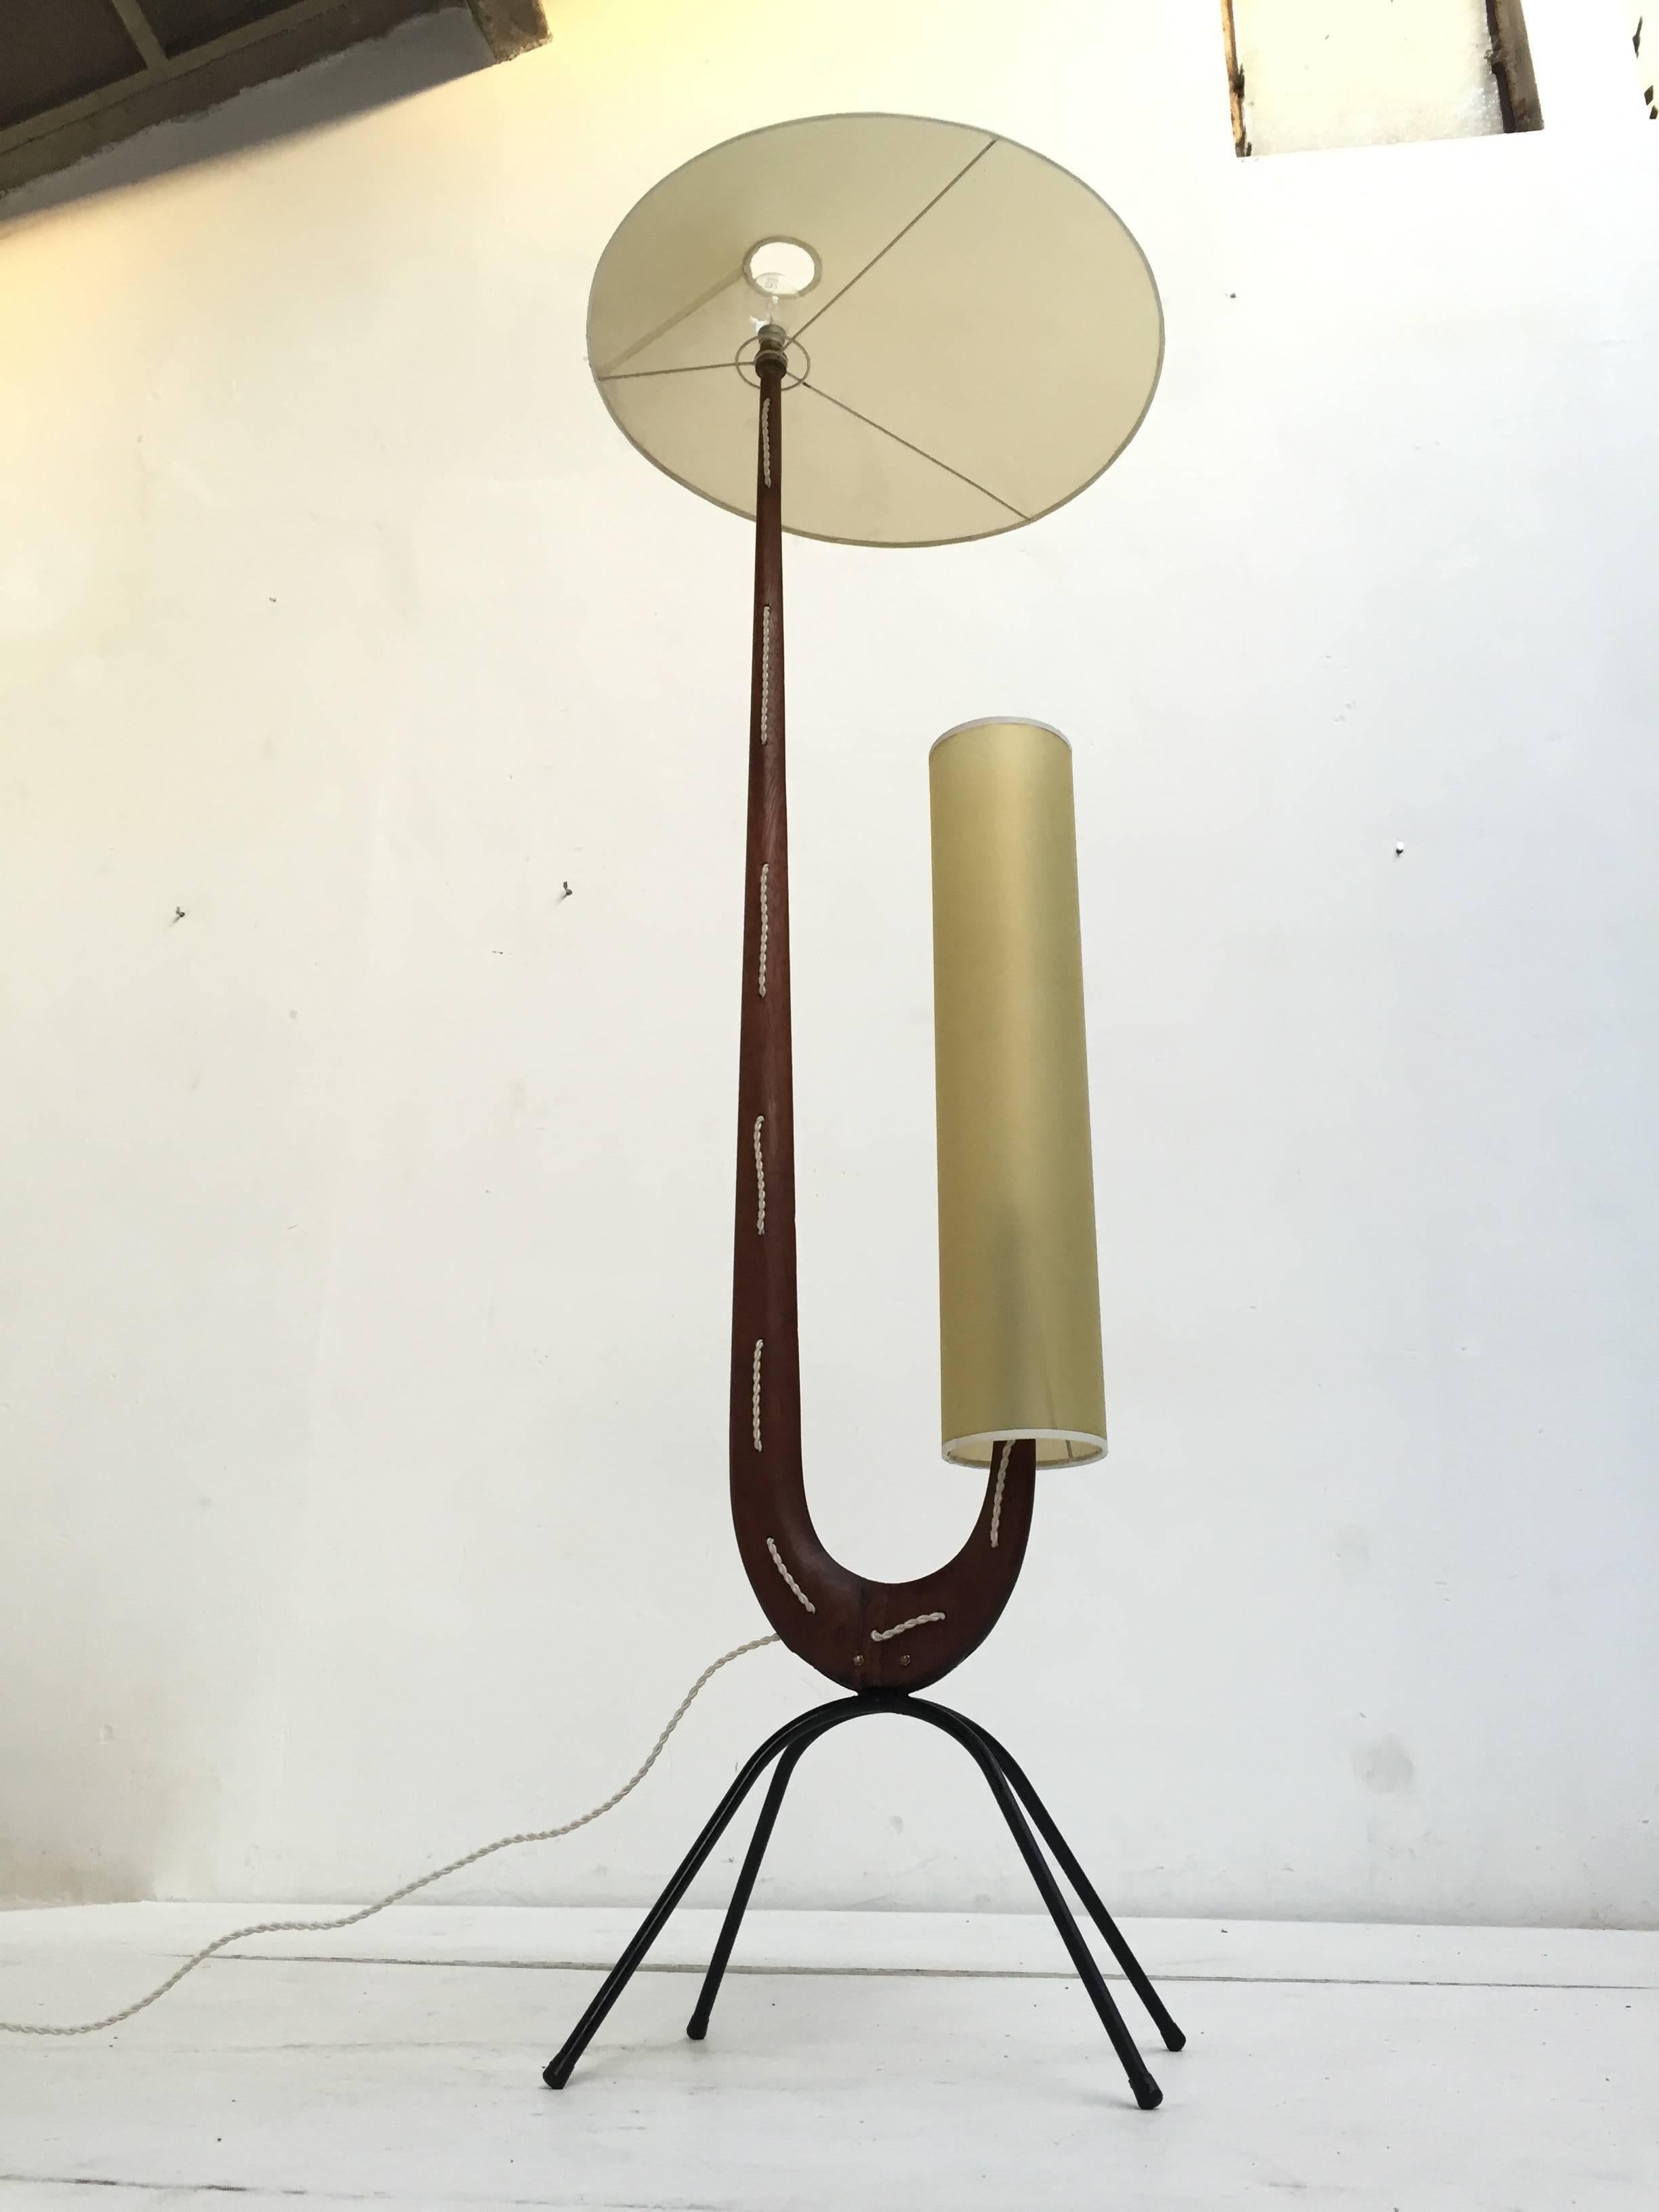 Stunning Sculptural Form Floor Lamp by Rispal, France, 1950, Published 1